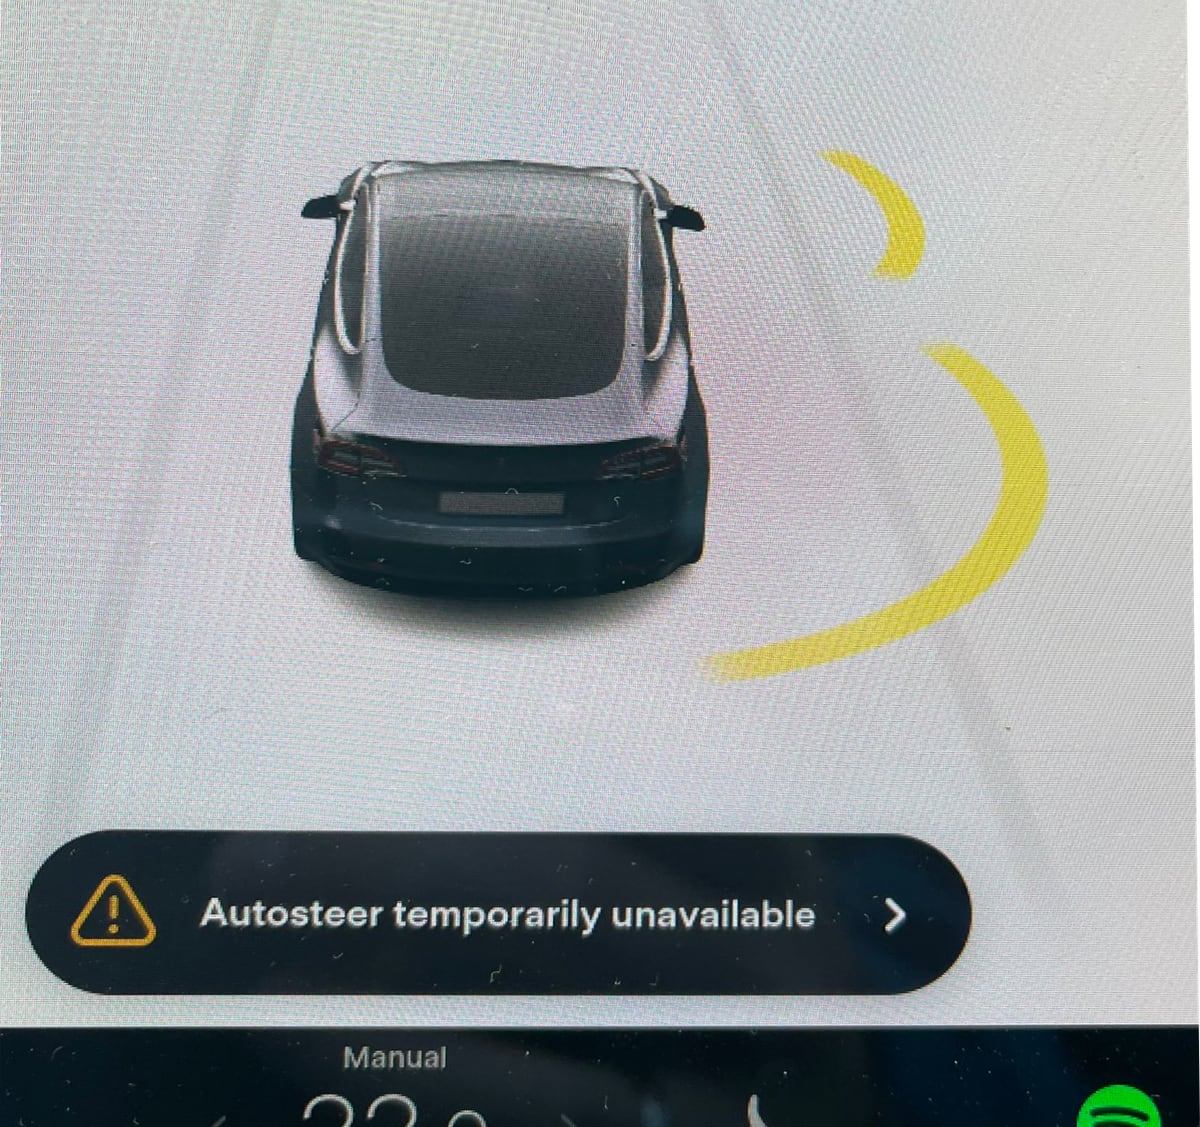 Tesla Vehicle Alerts feature in update 2022.36.15